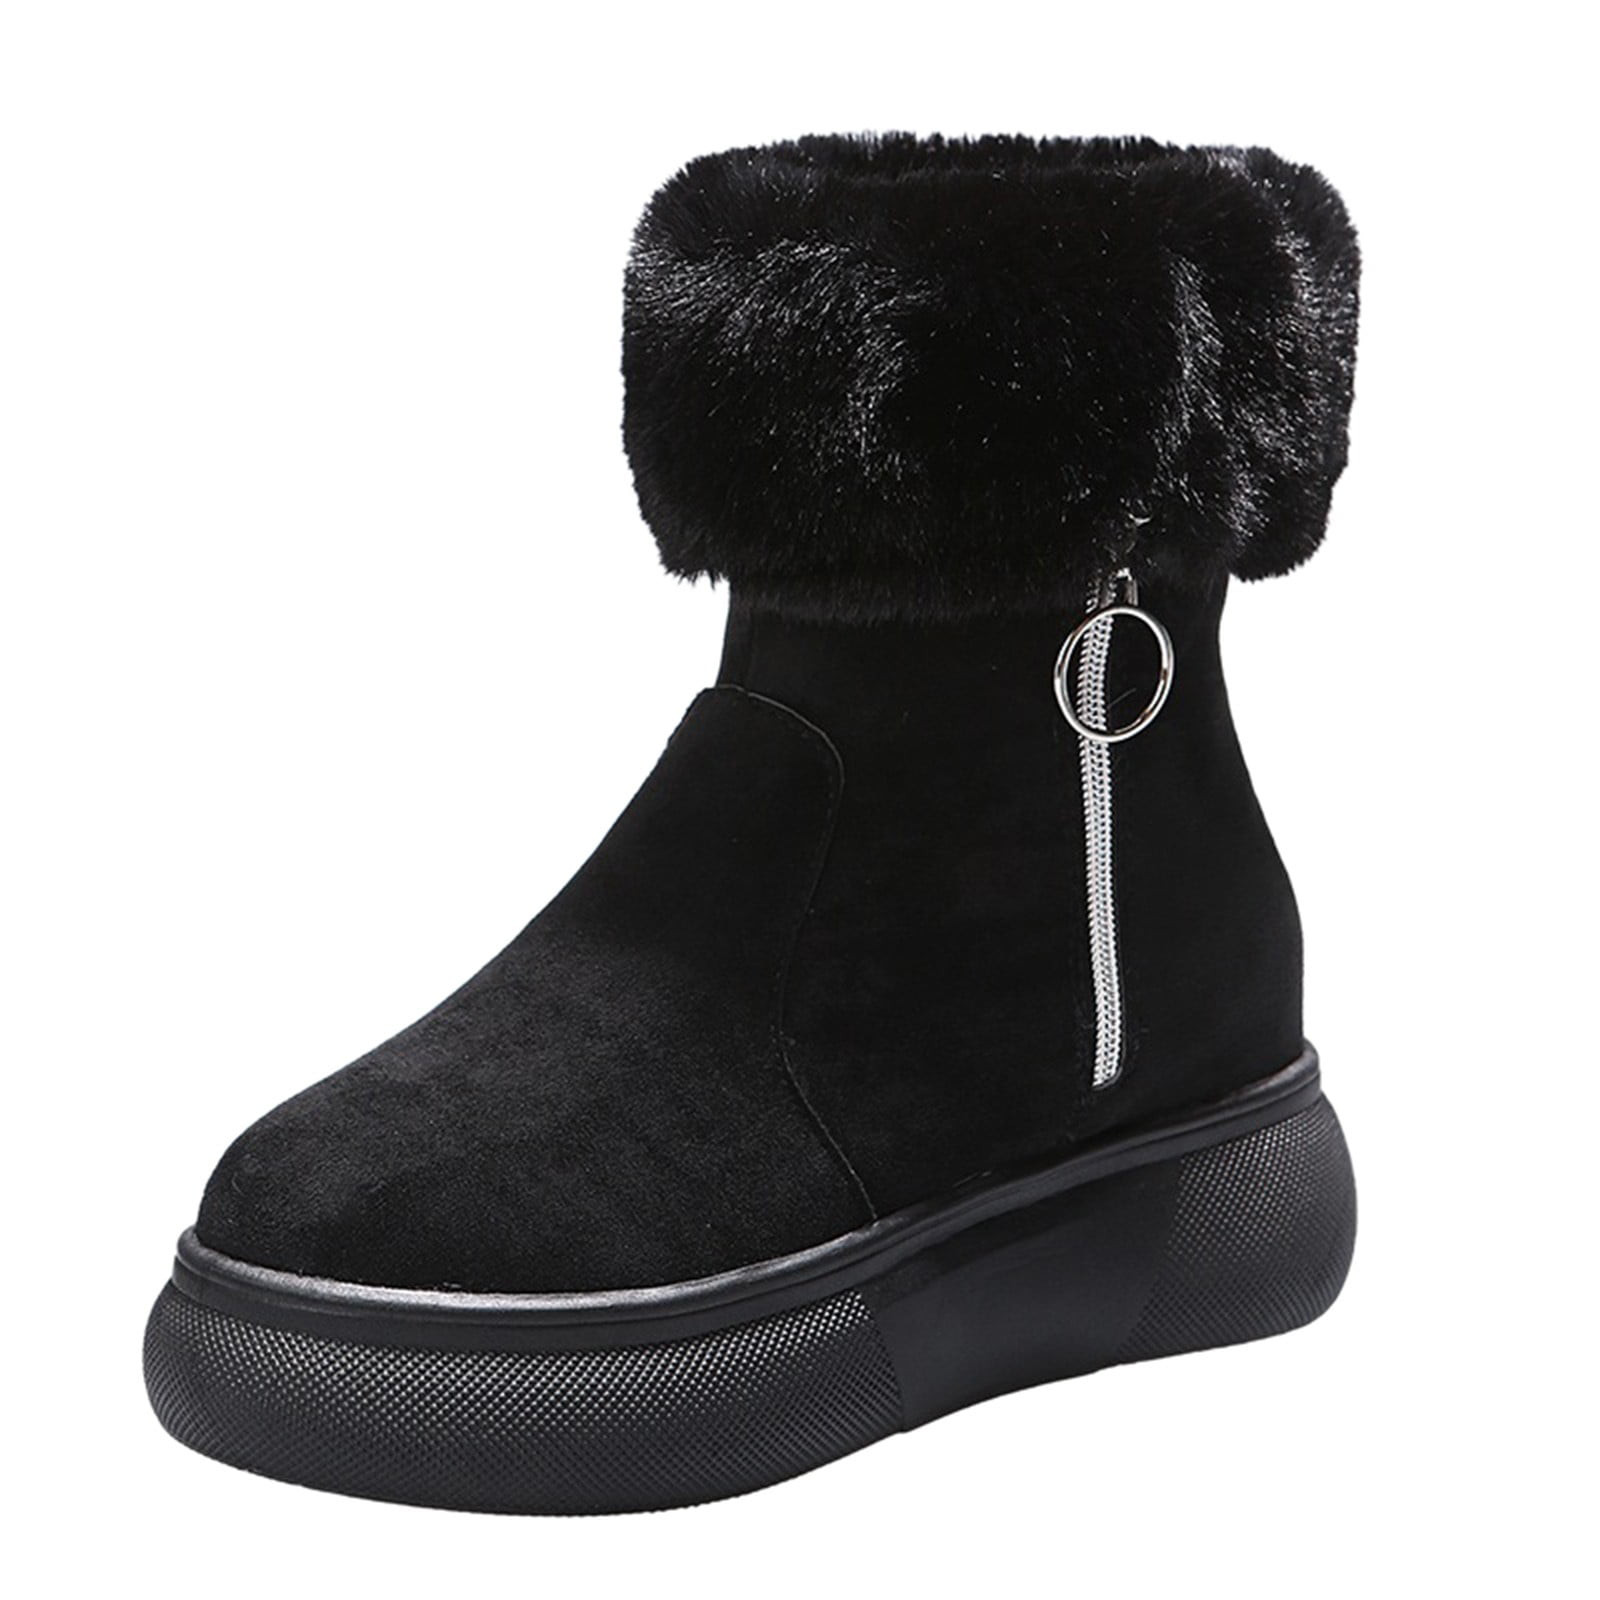 IDIFU Womens Casual Mid Wedge Heels Hidden Heels Platform Fleece Lined Faux Suede Lace Up Mid Calf Snow Boots